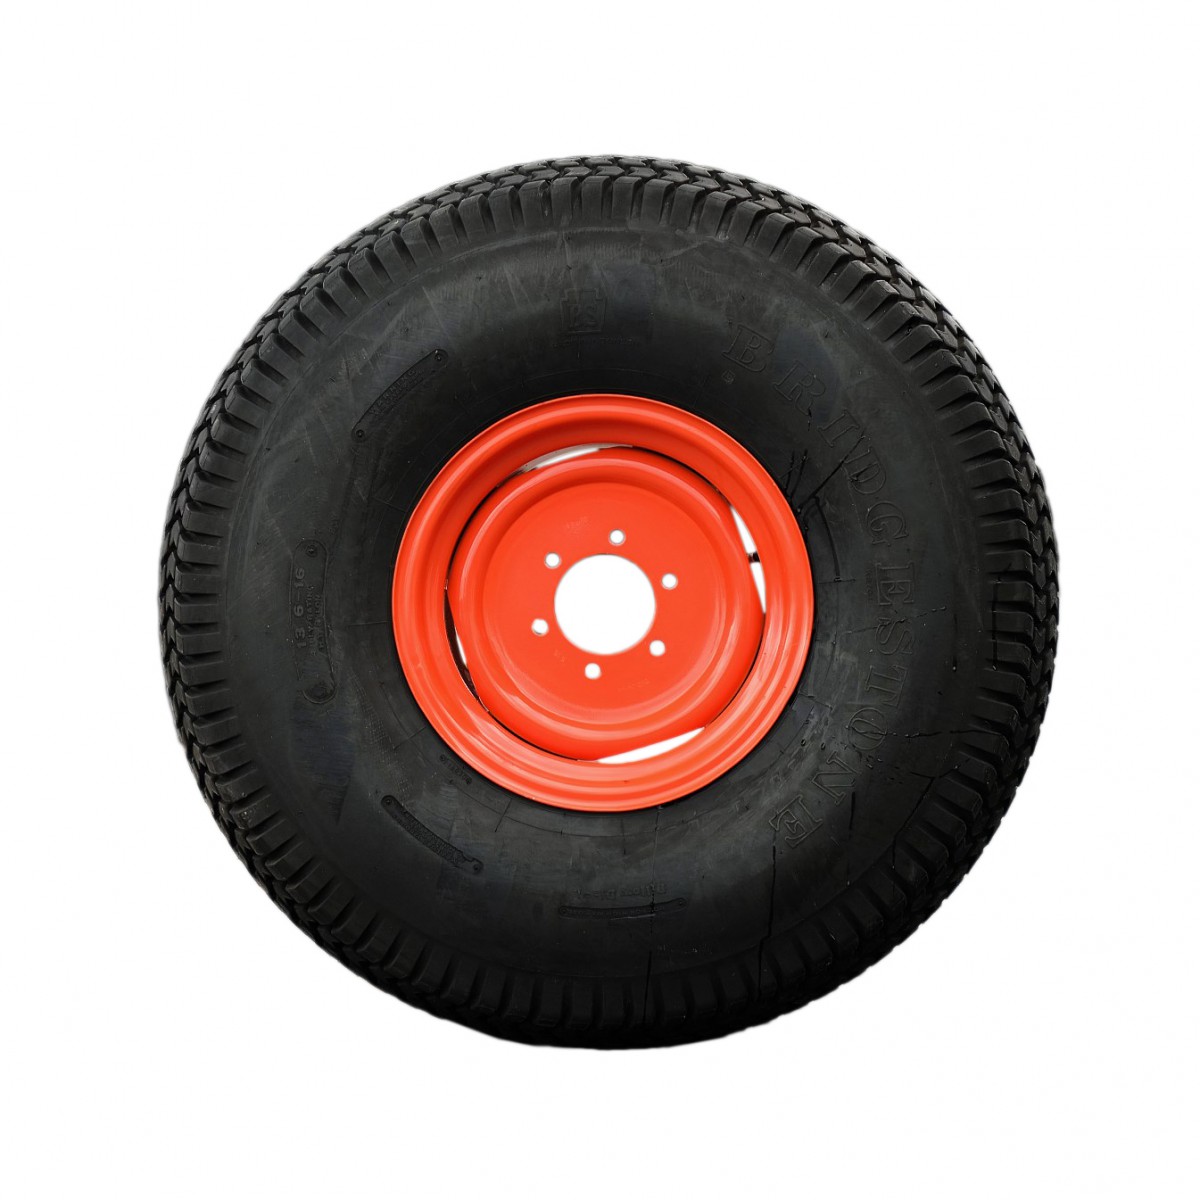 Complete wheel 13.6-16 / grass tire